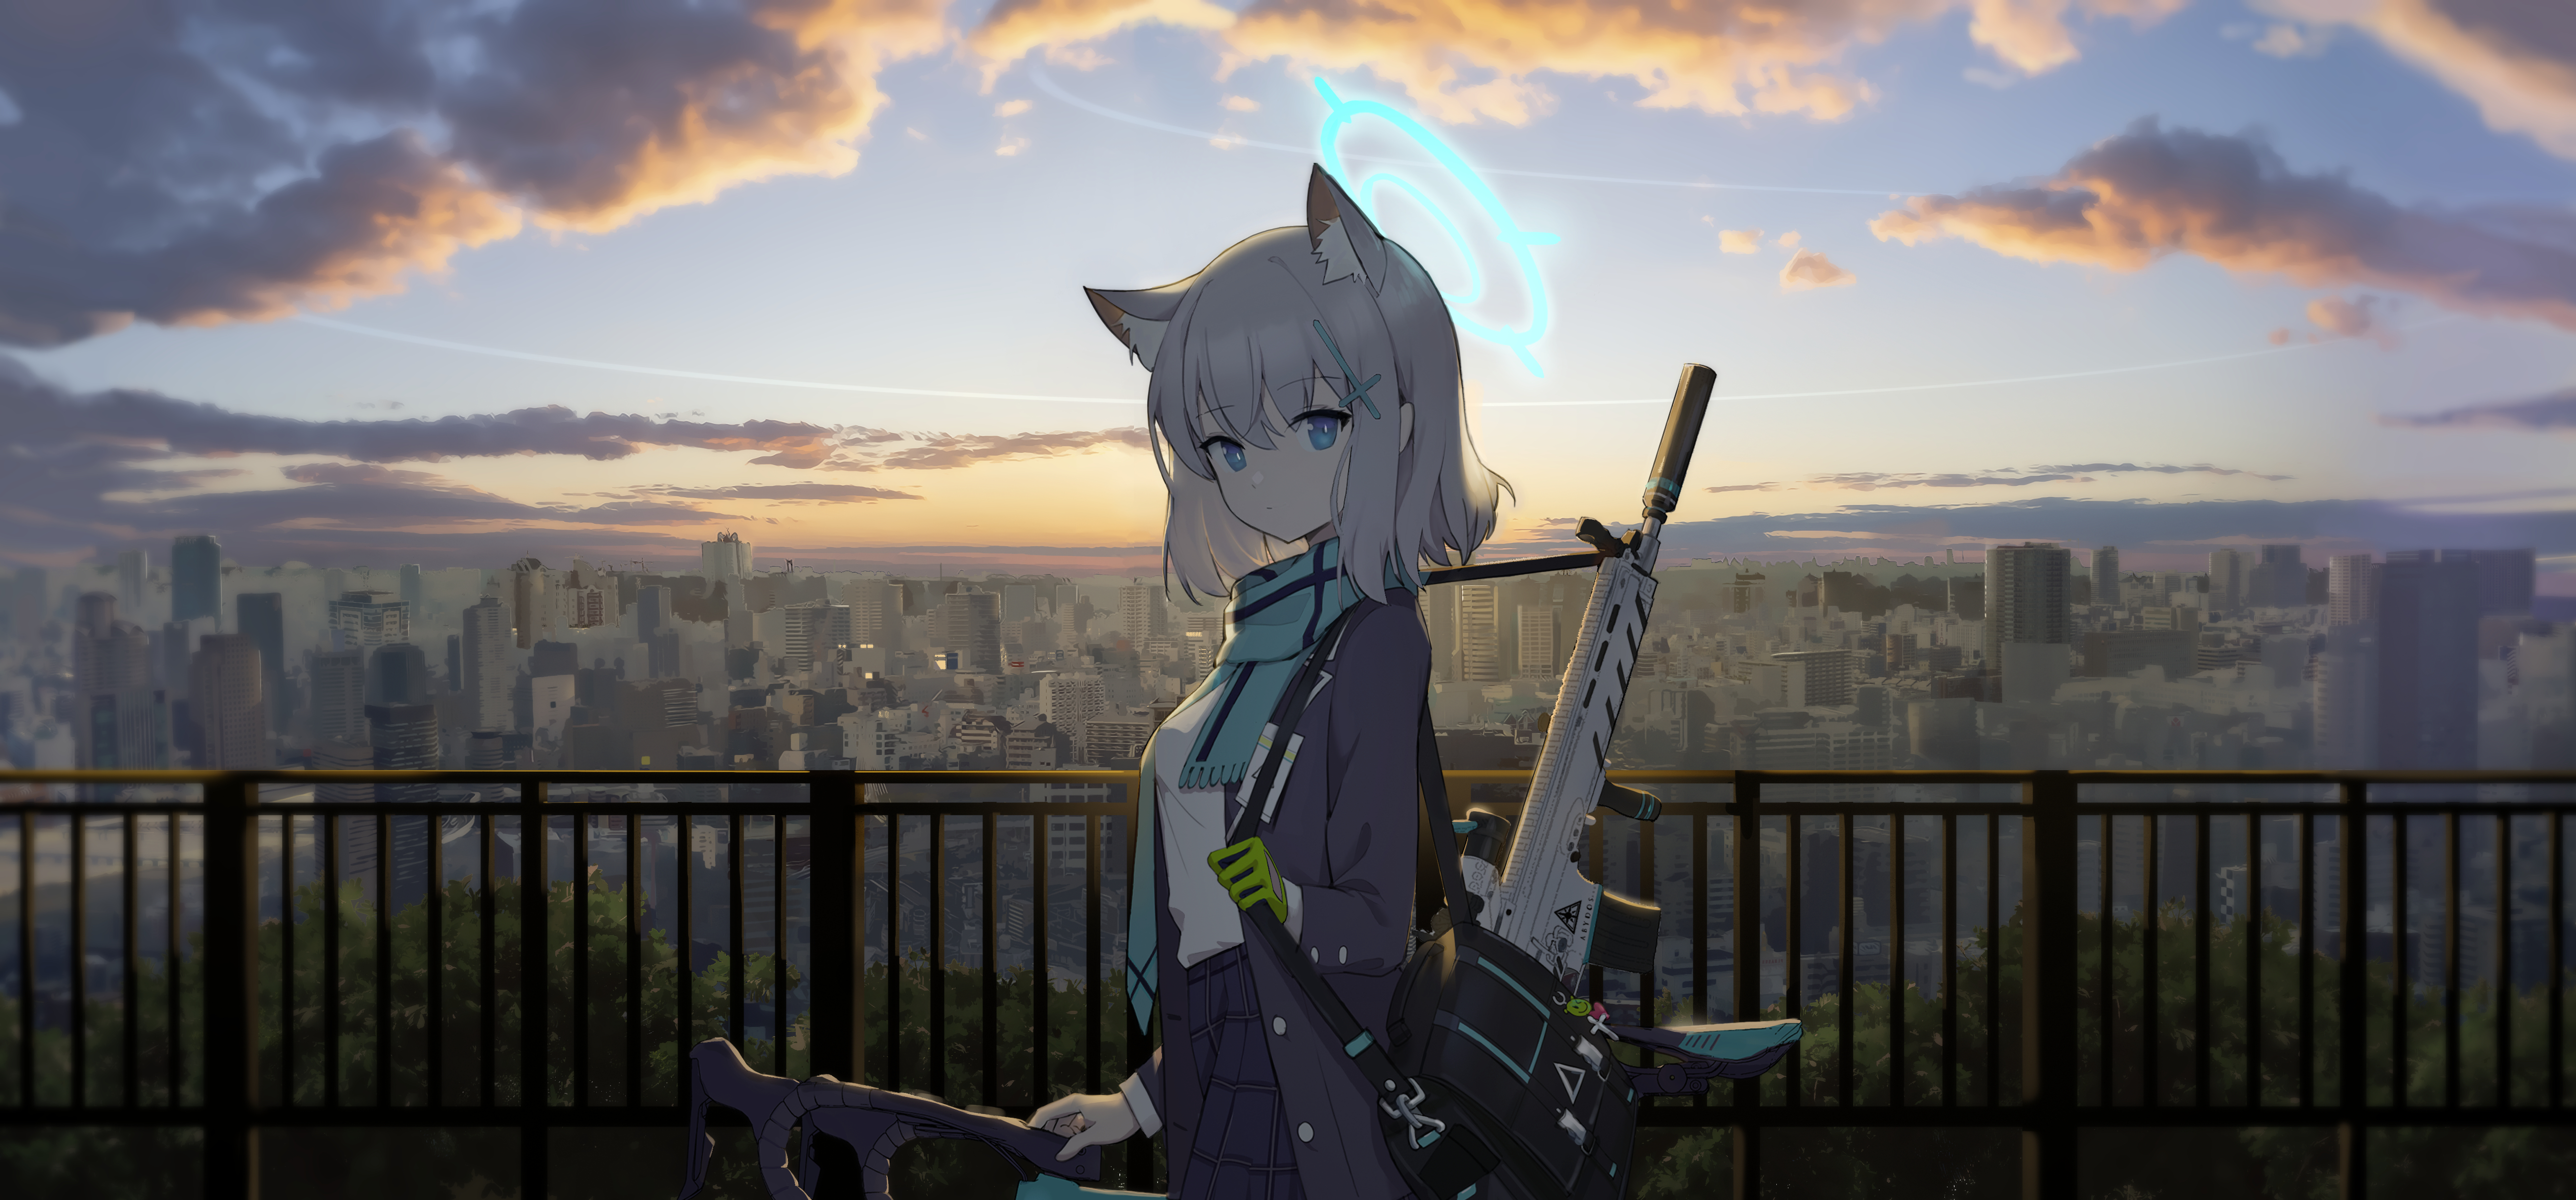 Anime Girl In School Uniform Watching City Sky Wallpapers